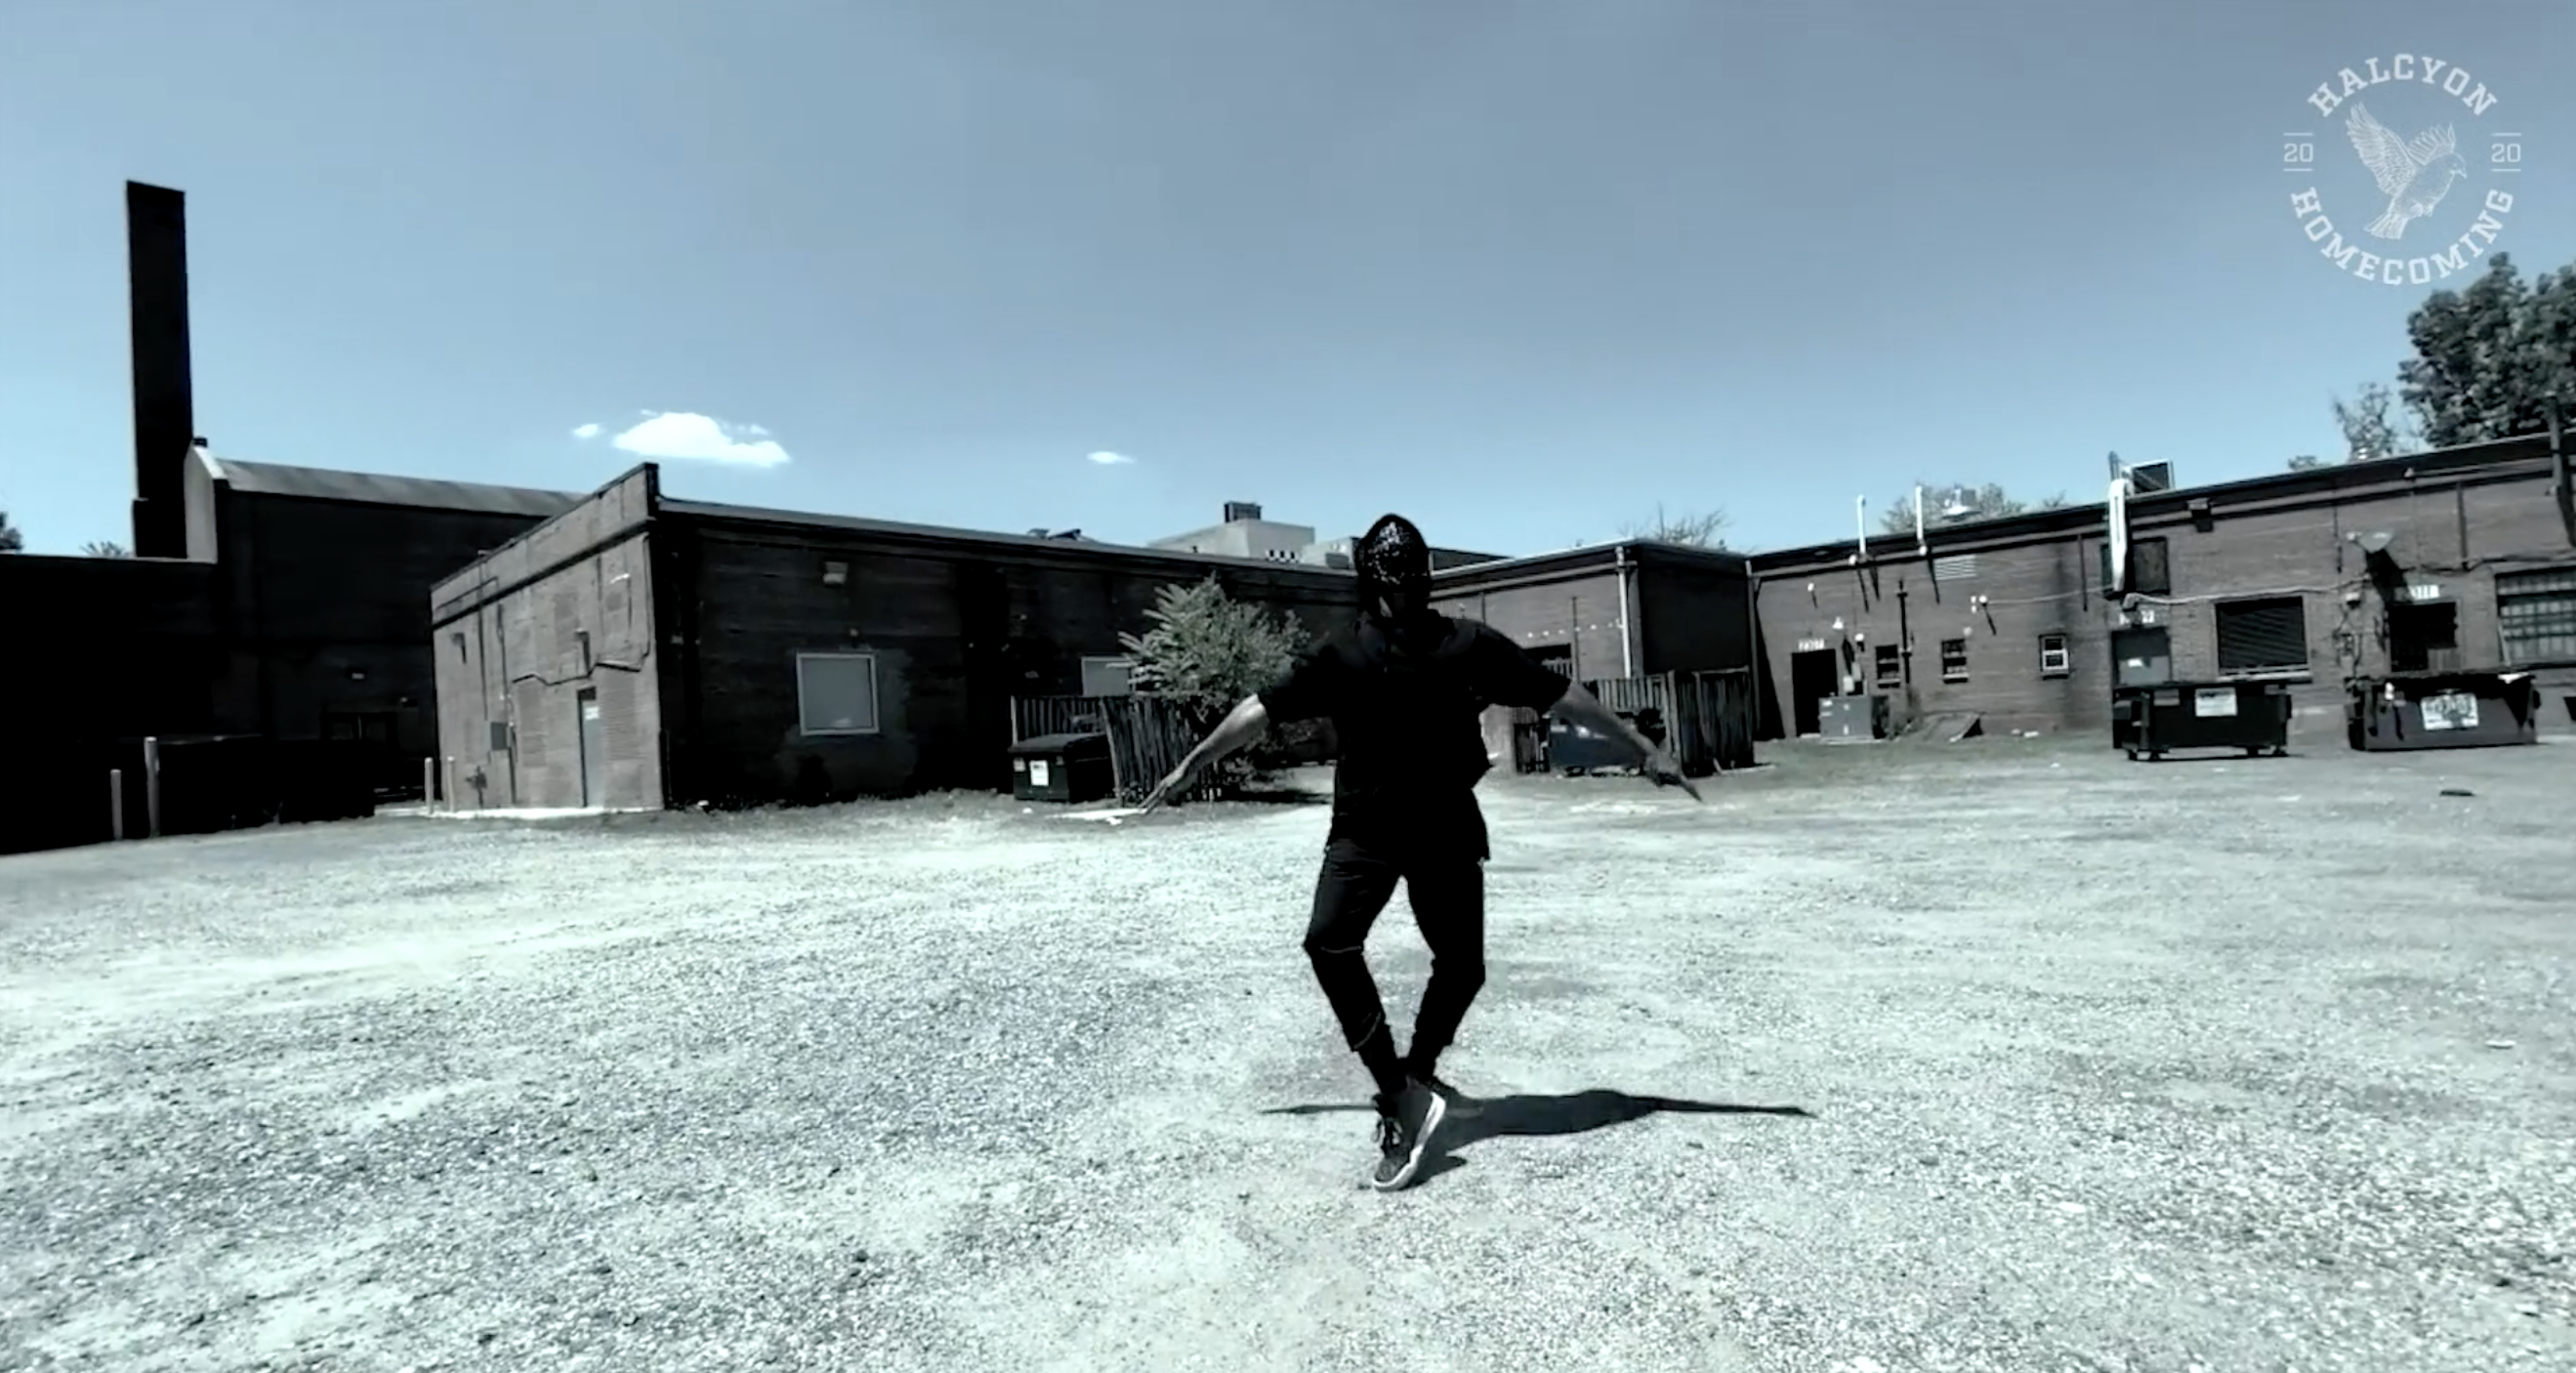 dancing performance screenshot from video below